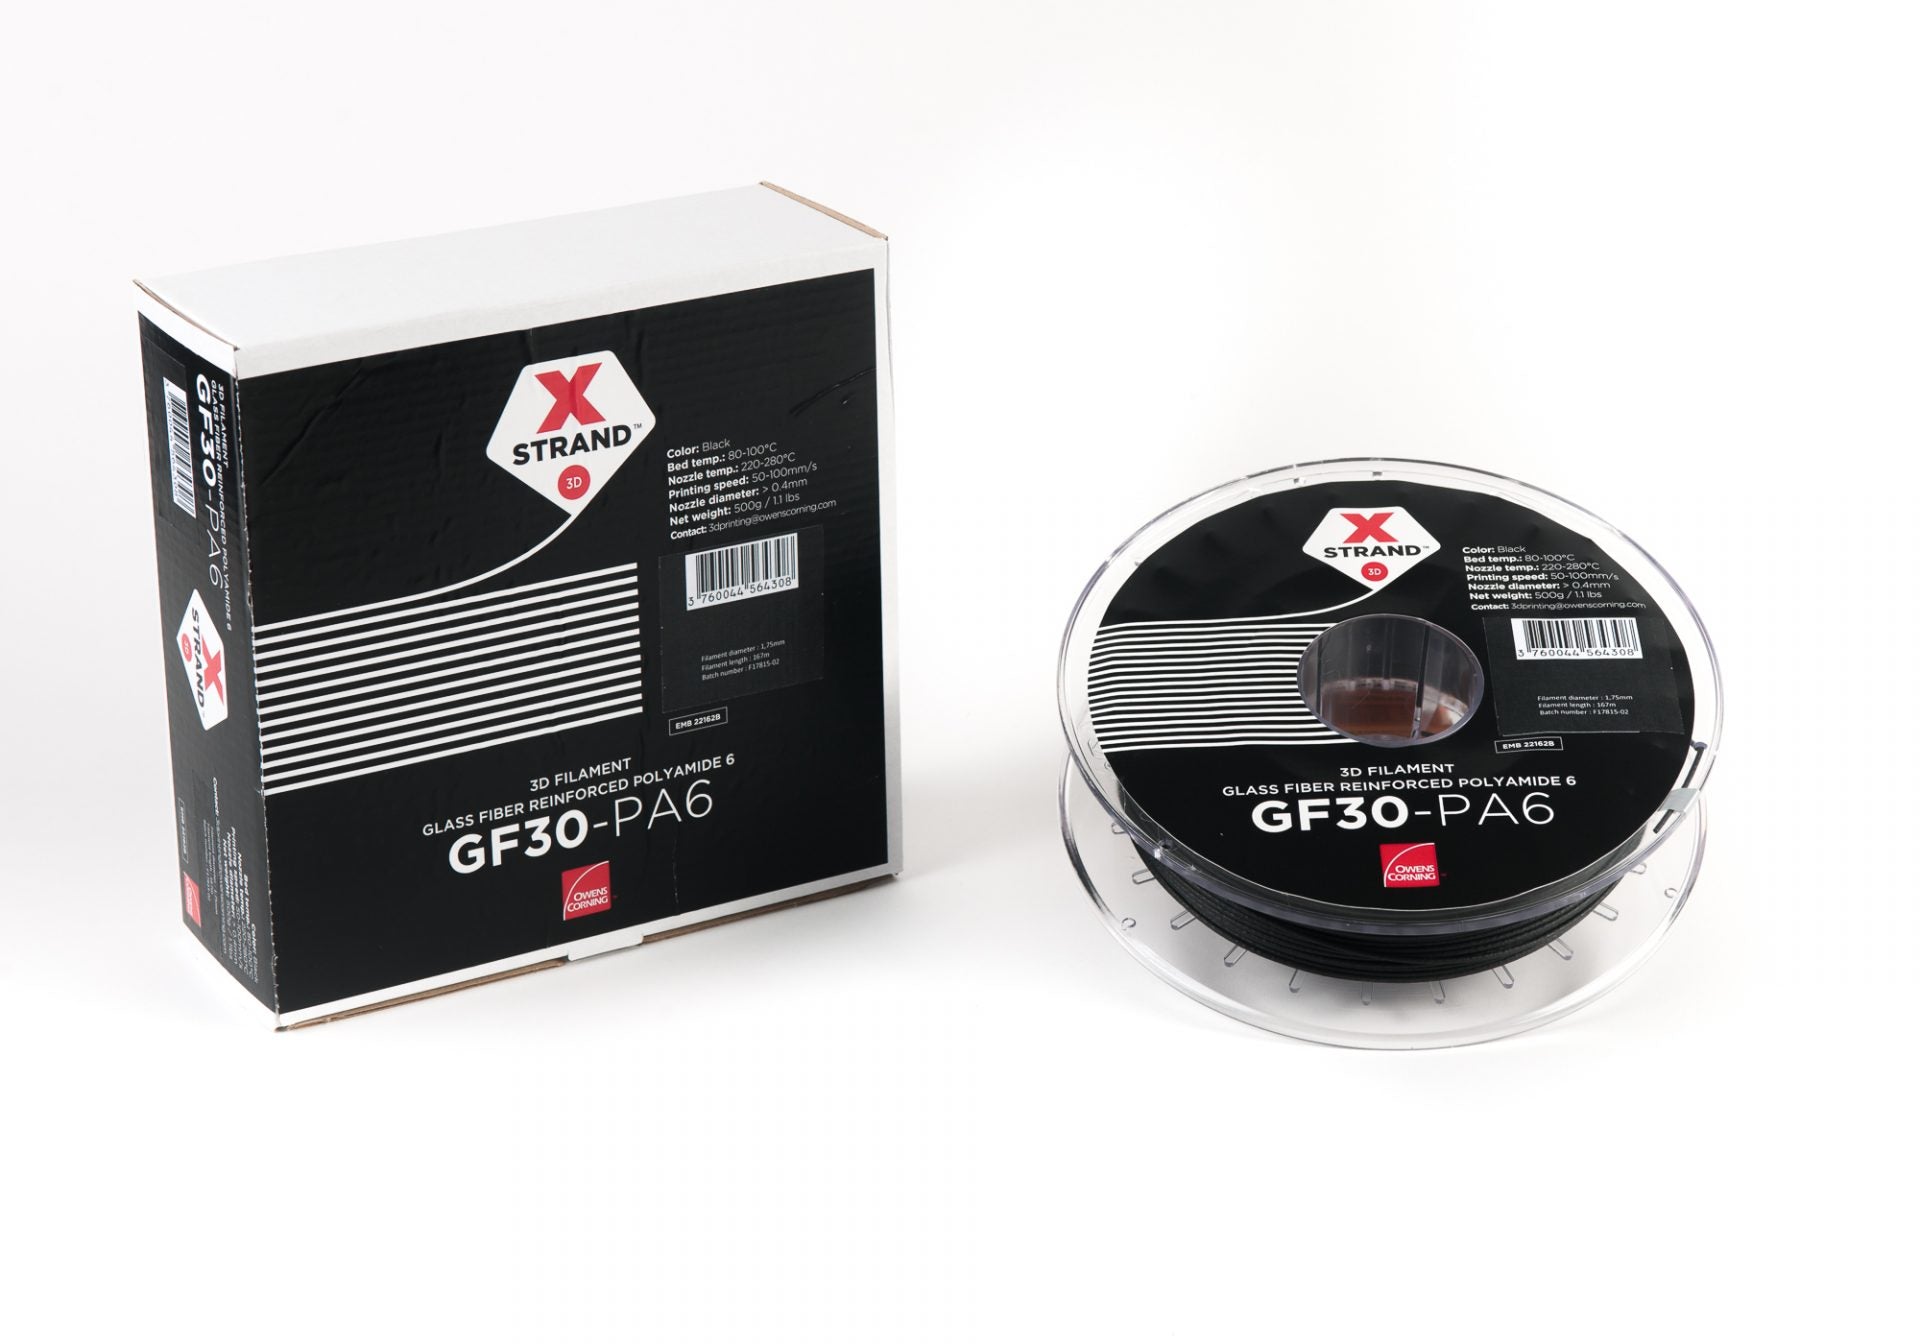 XSTRAND GF30-PA6 - 500g - Owens Corning